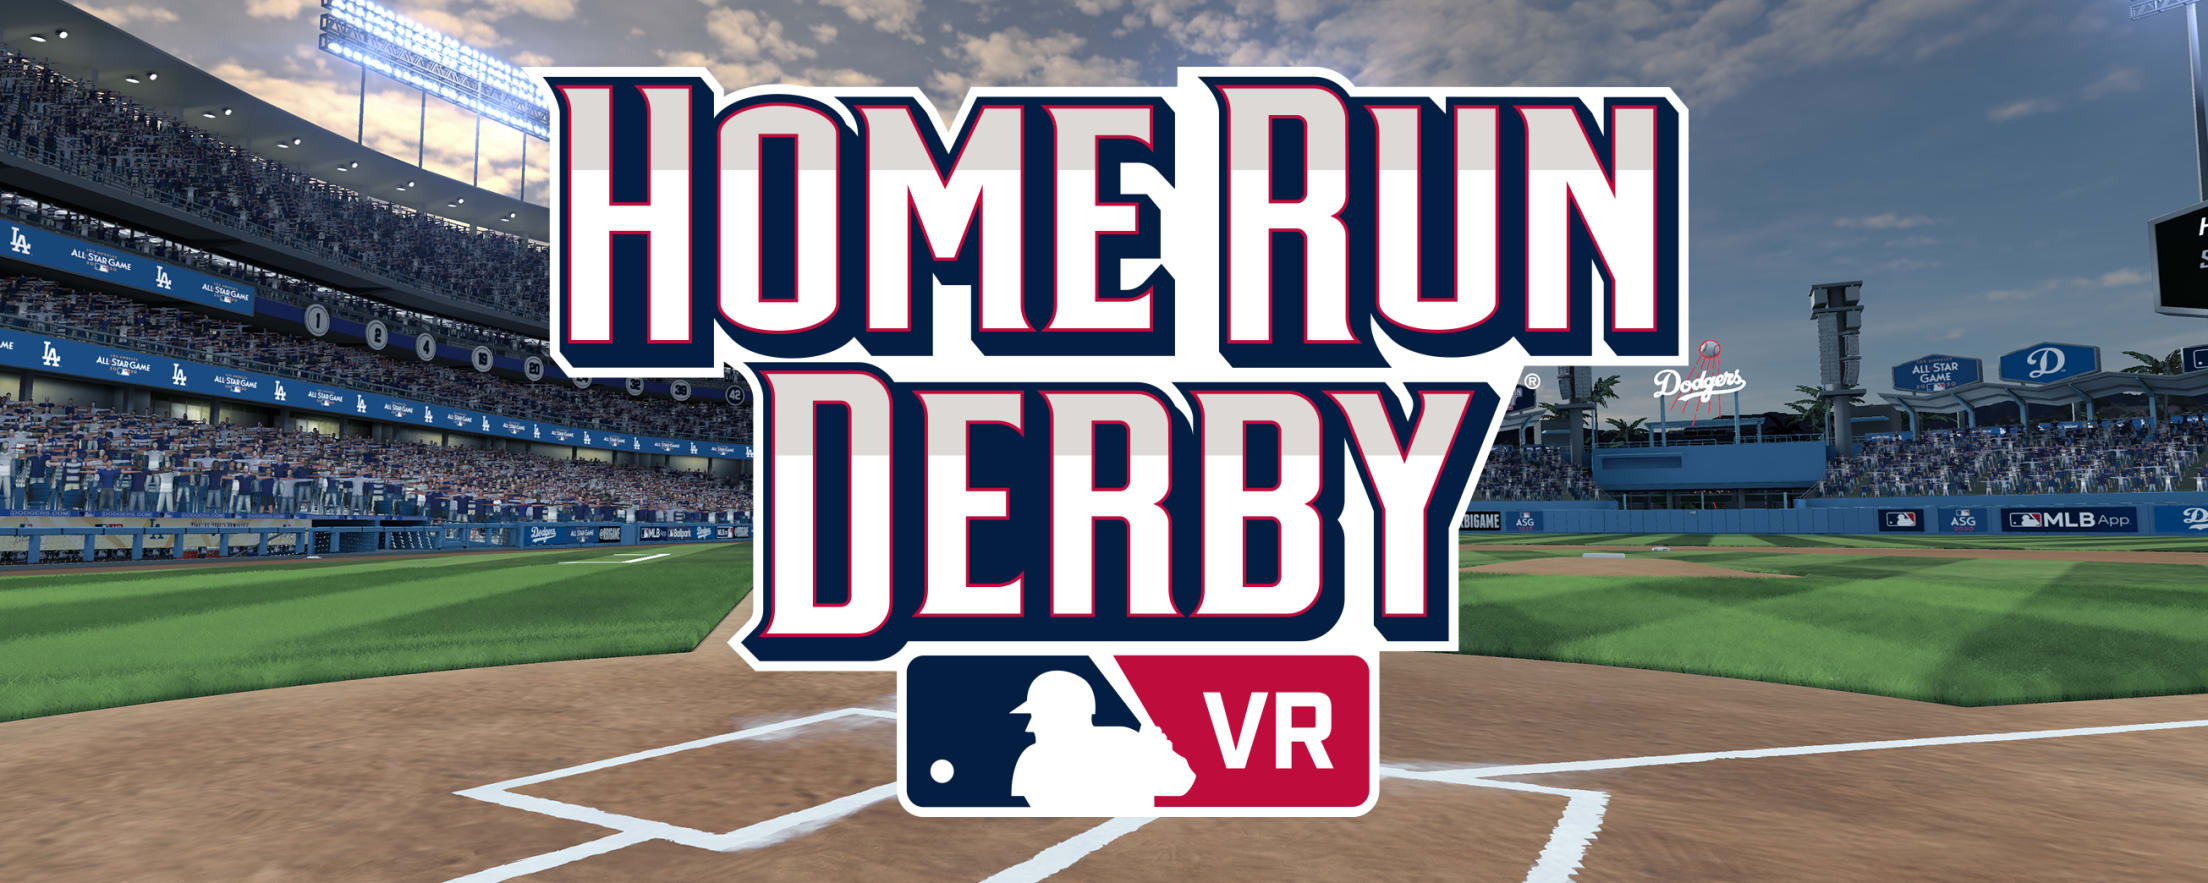 Home Run Derby VR MLB